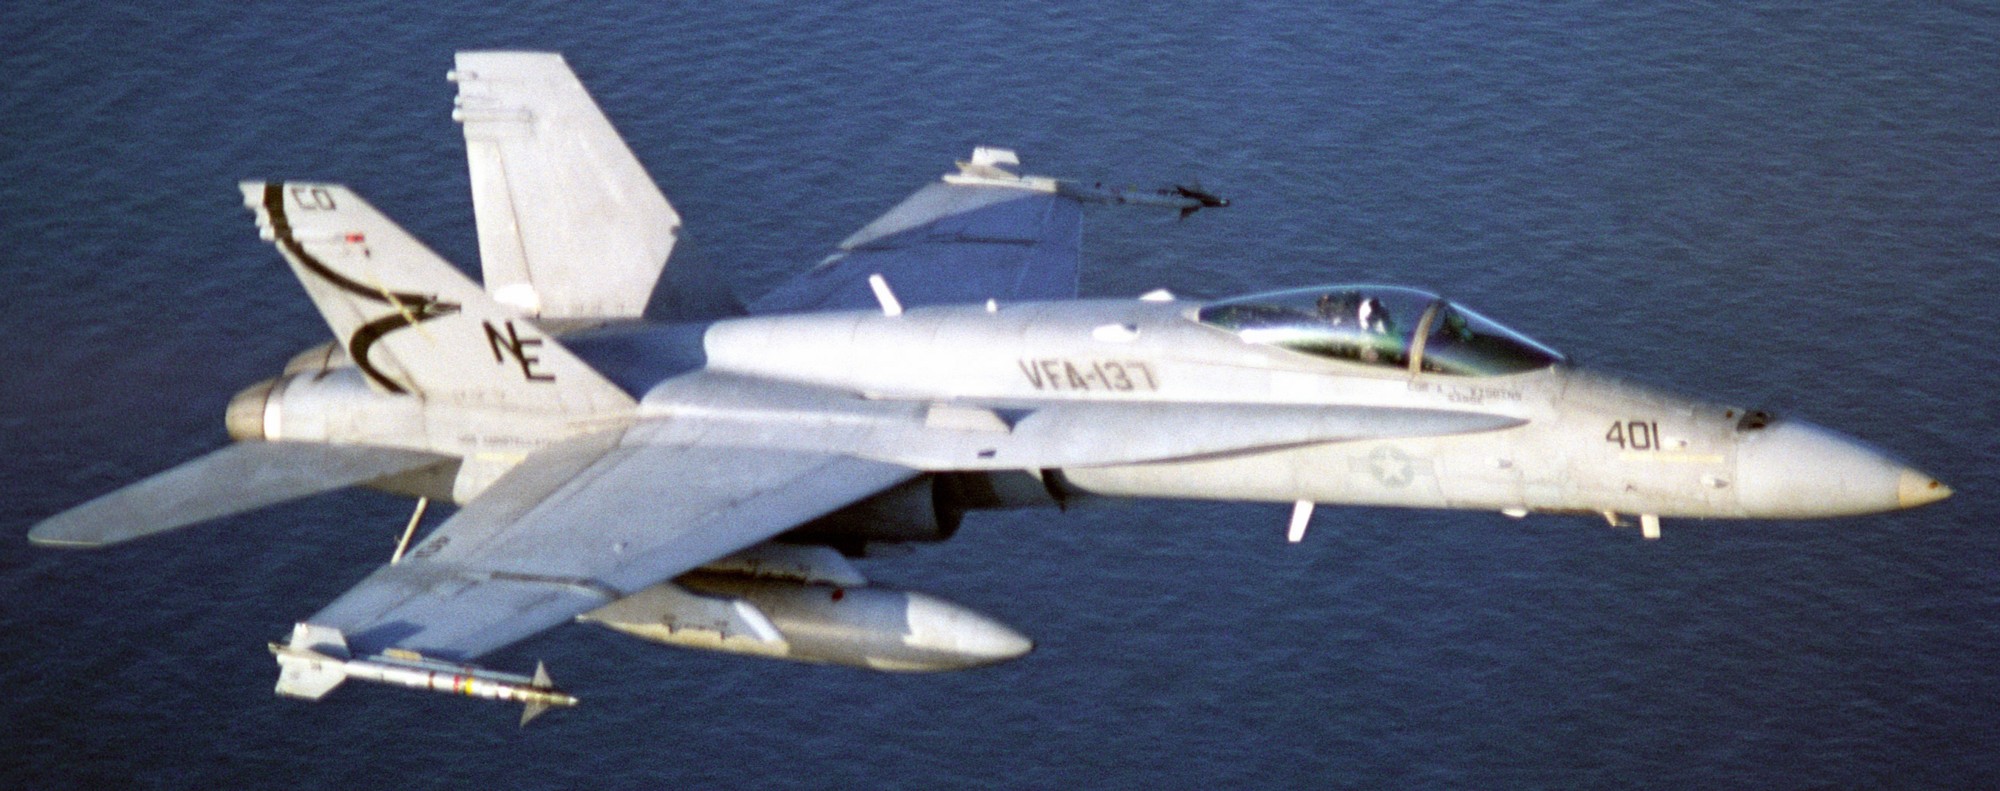 vfa-137 kestrels strike fighter squadron f/a-18c hornet cvw-2 1996 74